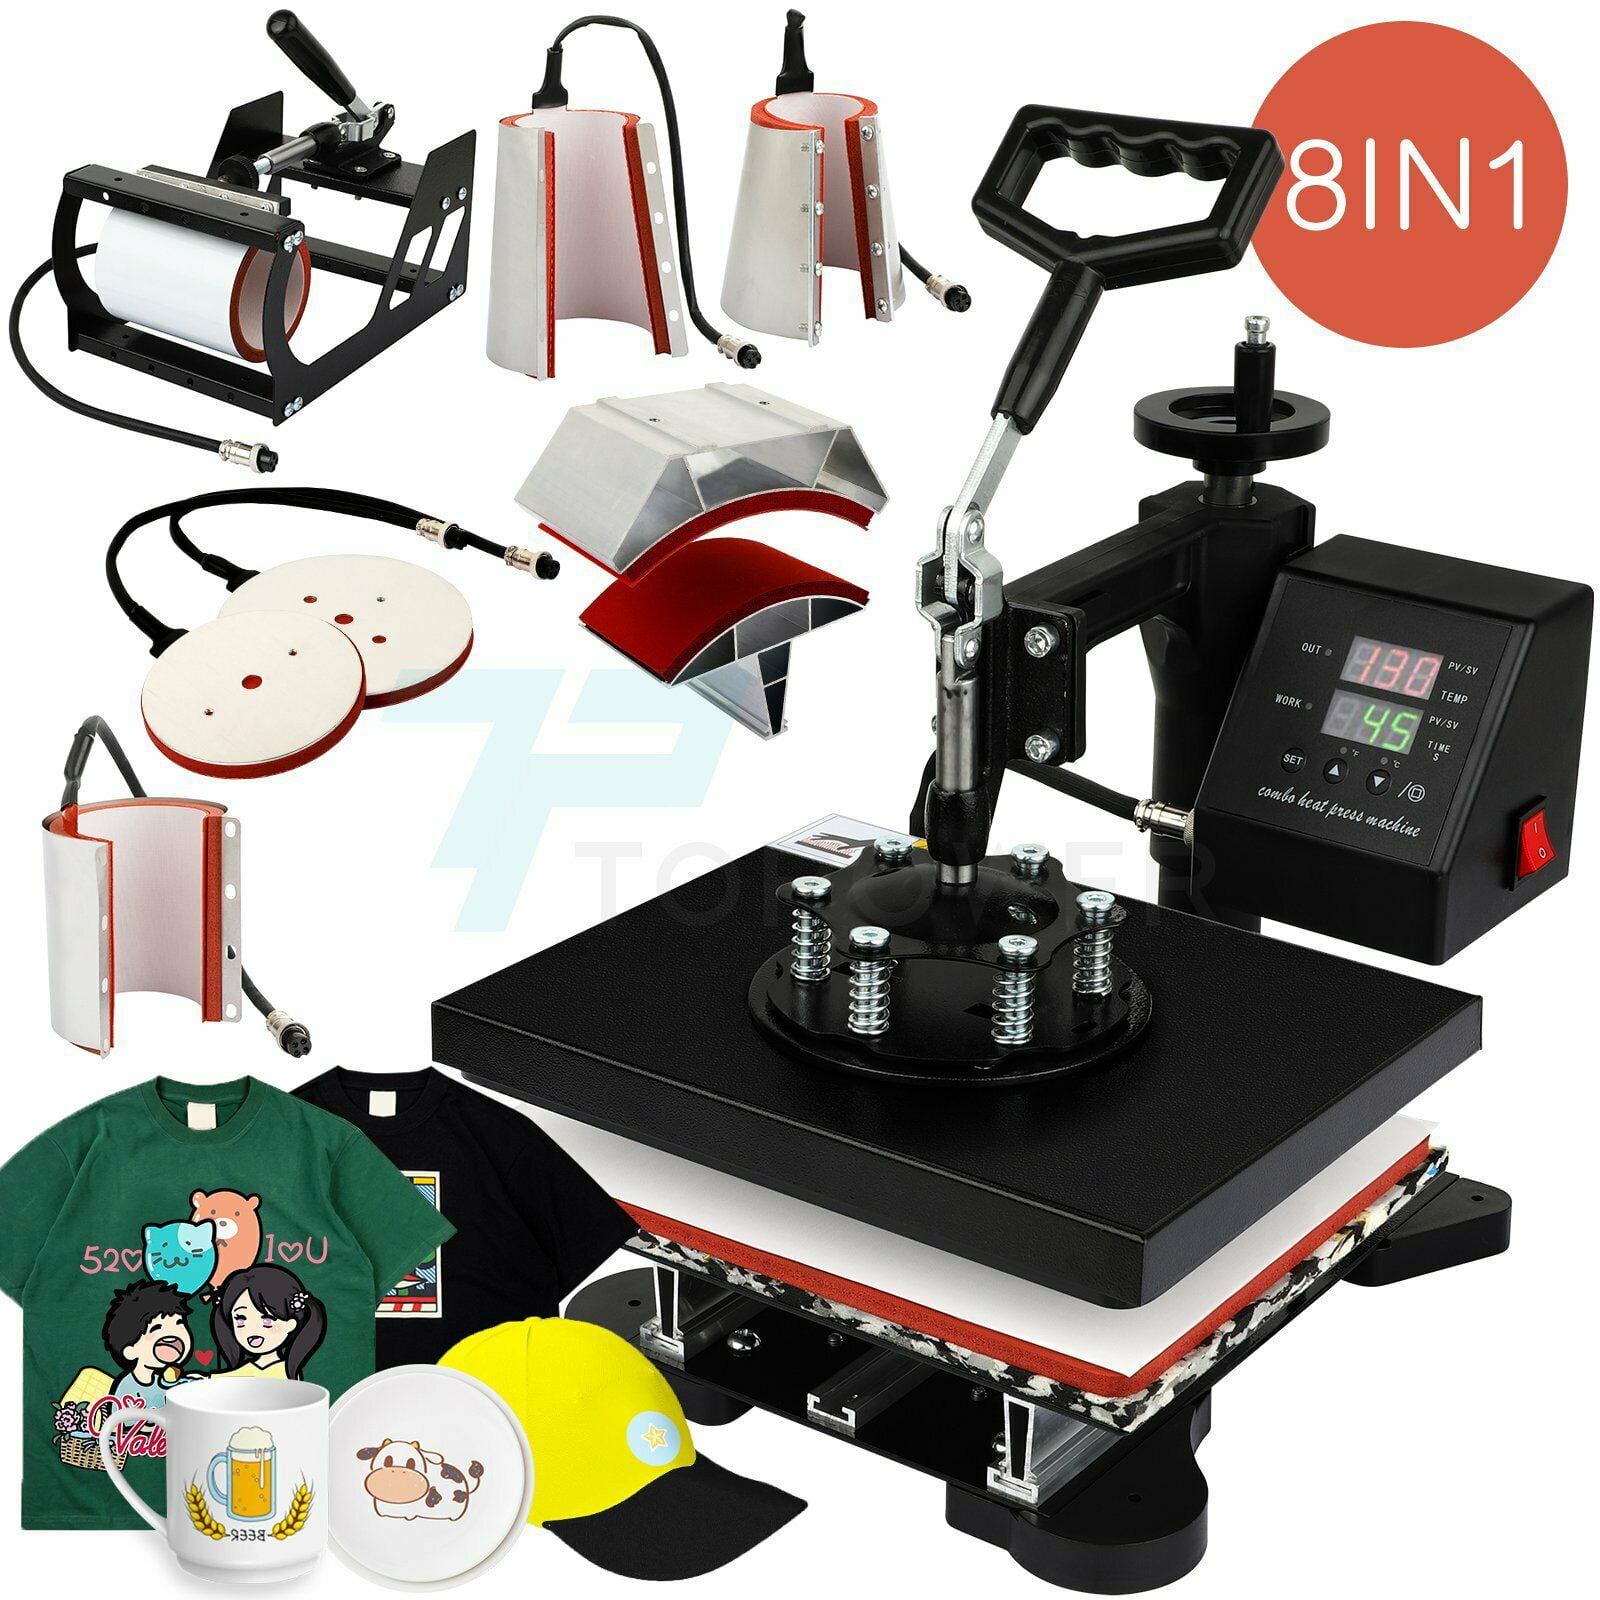 5In1 Digital Heat Press Machine Sublimation forT-Shirt /Mug/Plate Hat Printer HU 